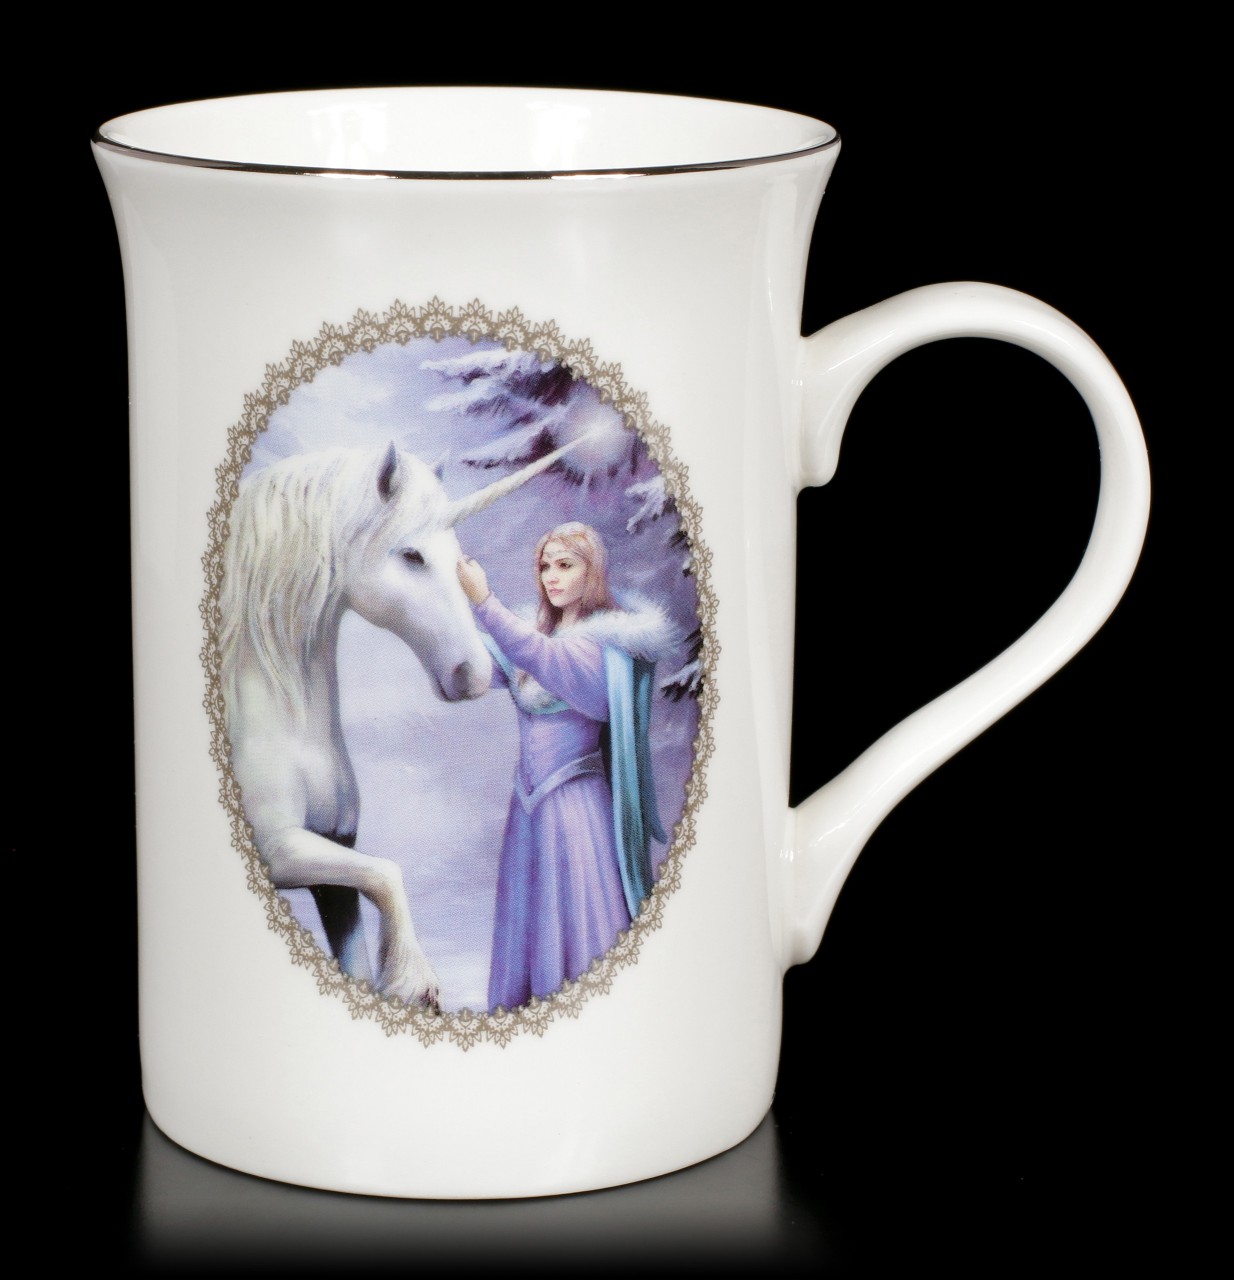 Mug with Unicorn - Pure Magic by Anne Stokes